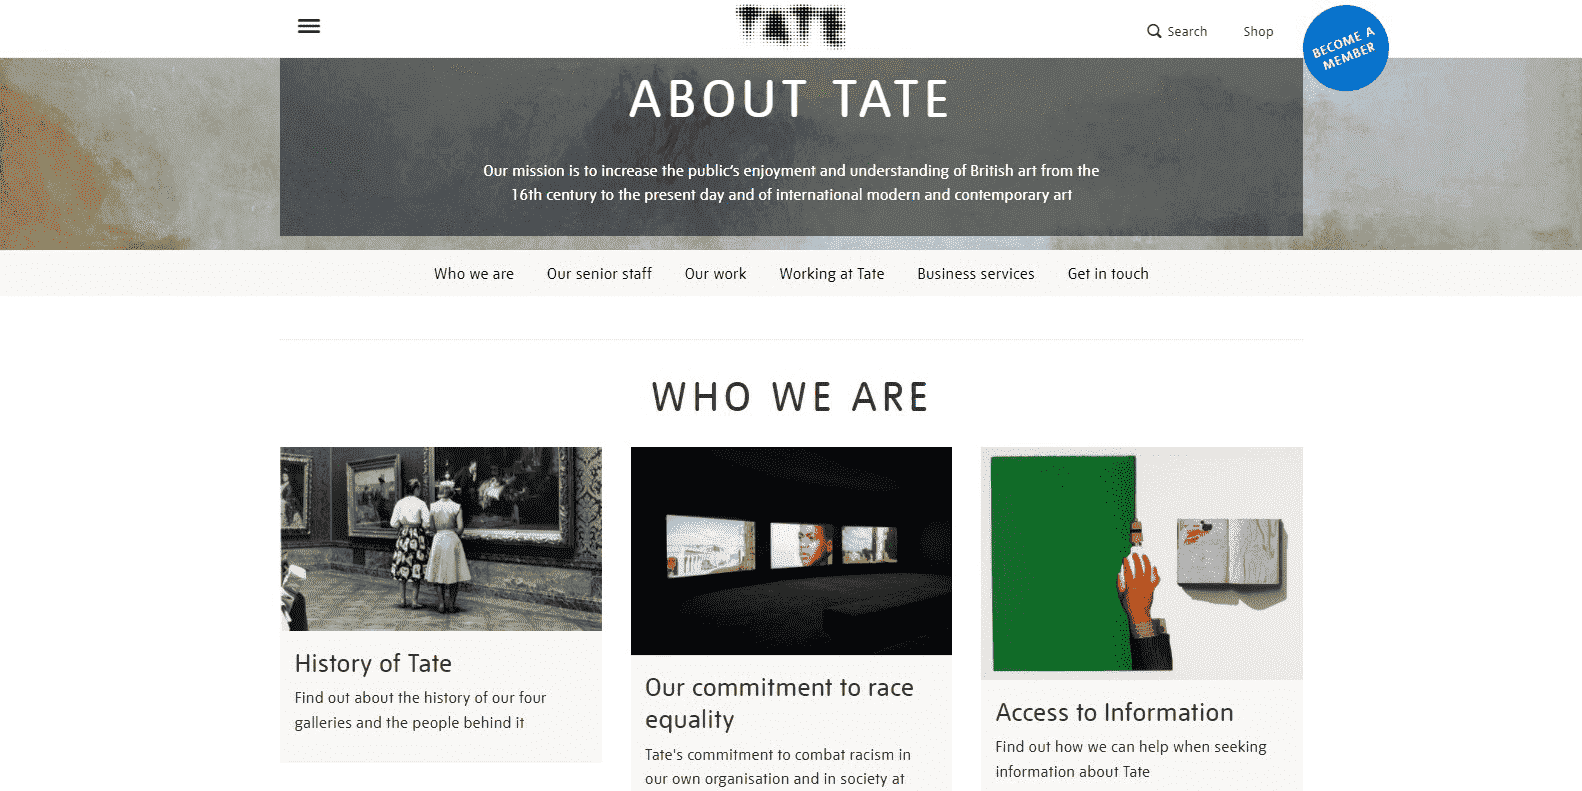 Tate About Us page